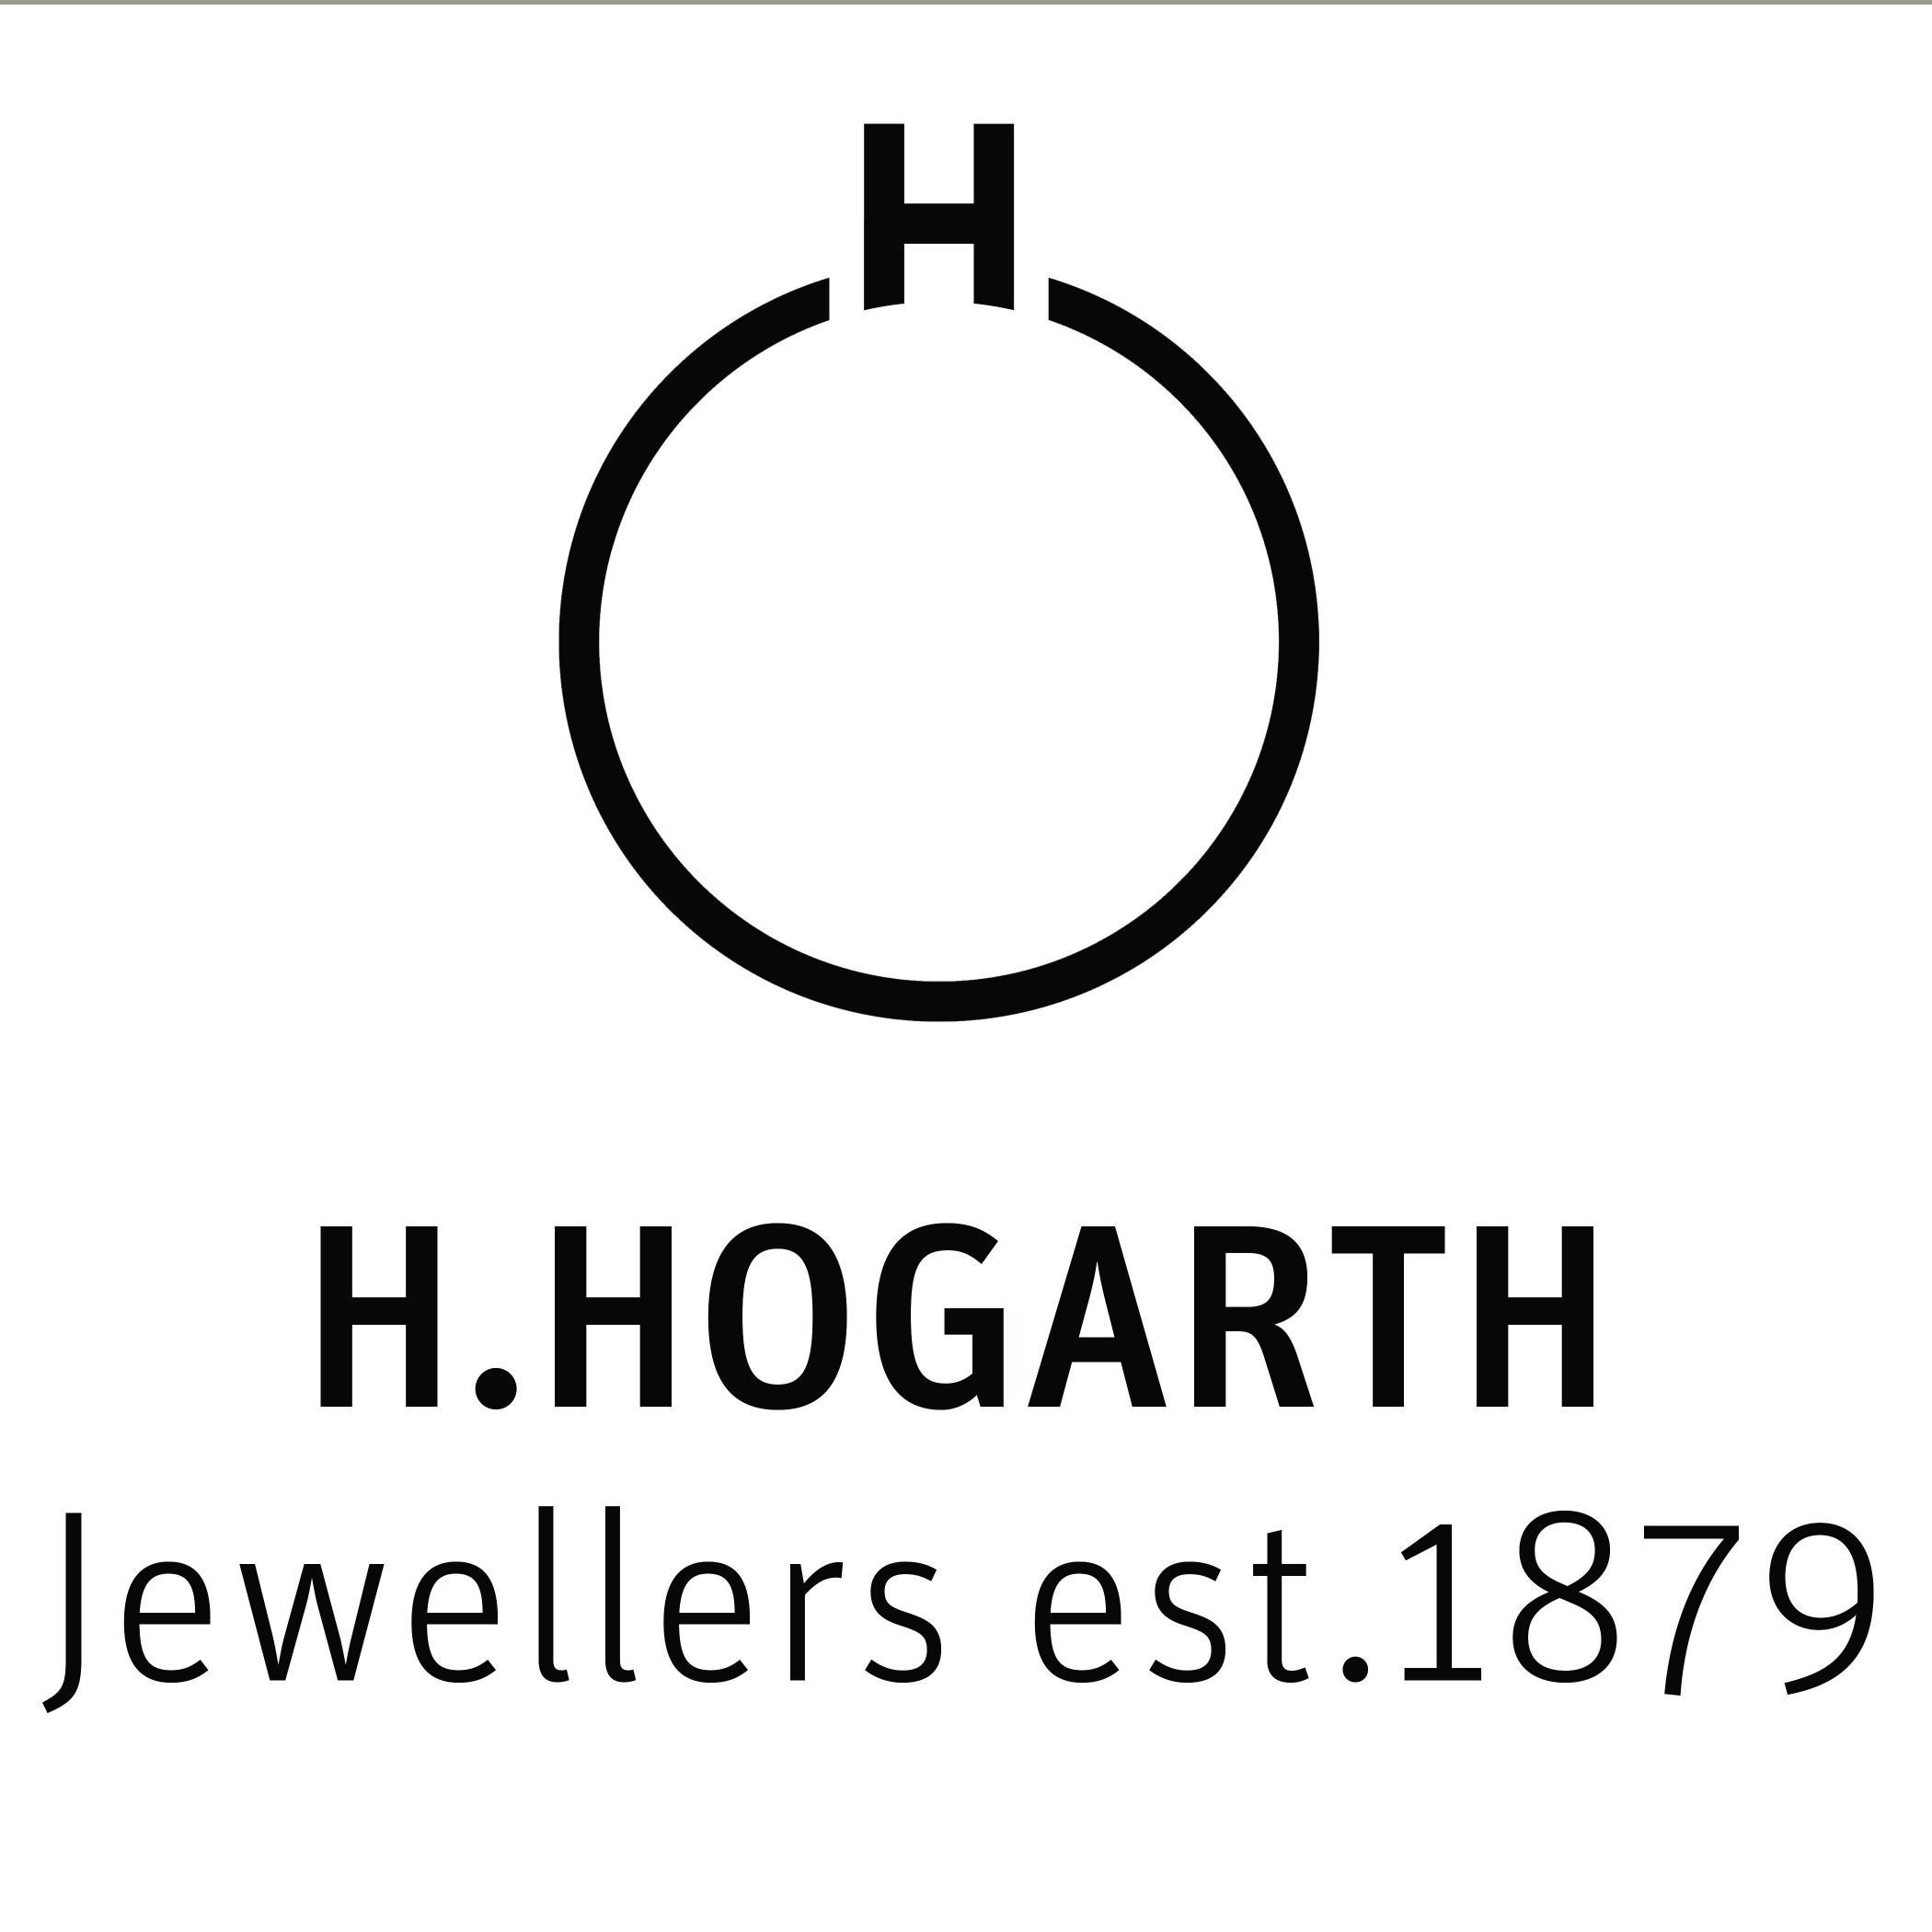 H.Hogarth Jewellers